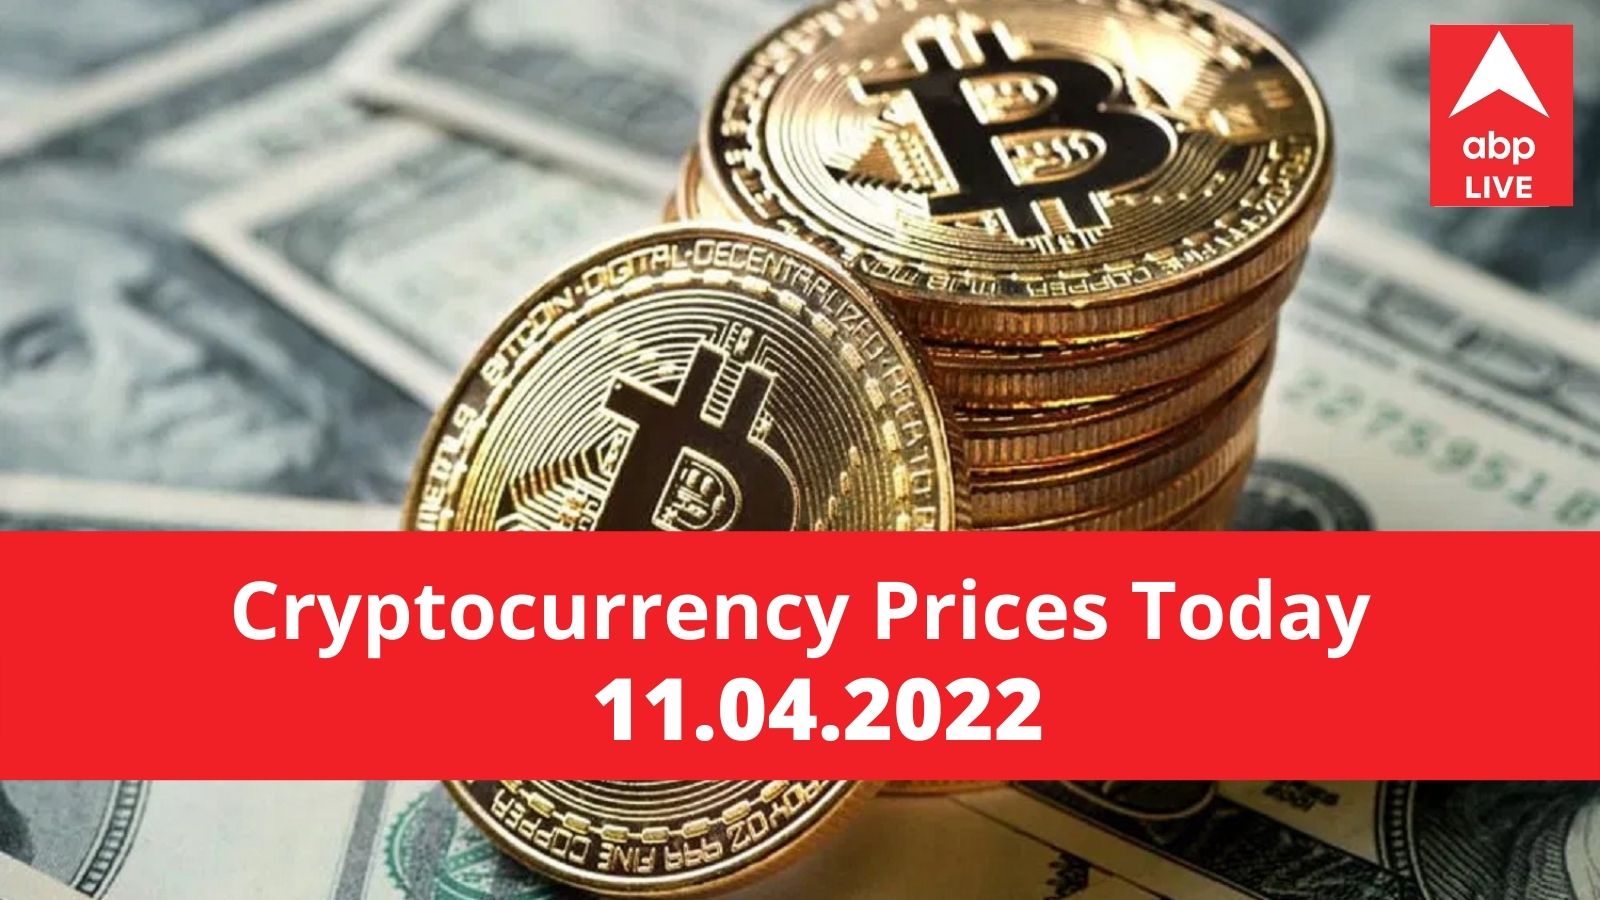 Other cryptocurrency prices crypto flix telegram